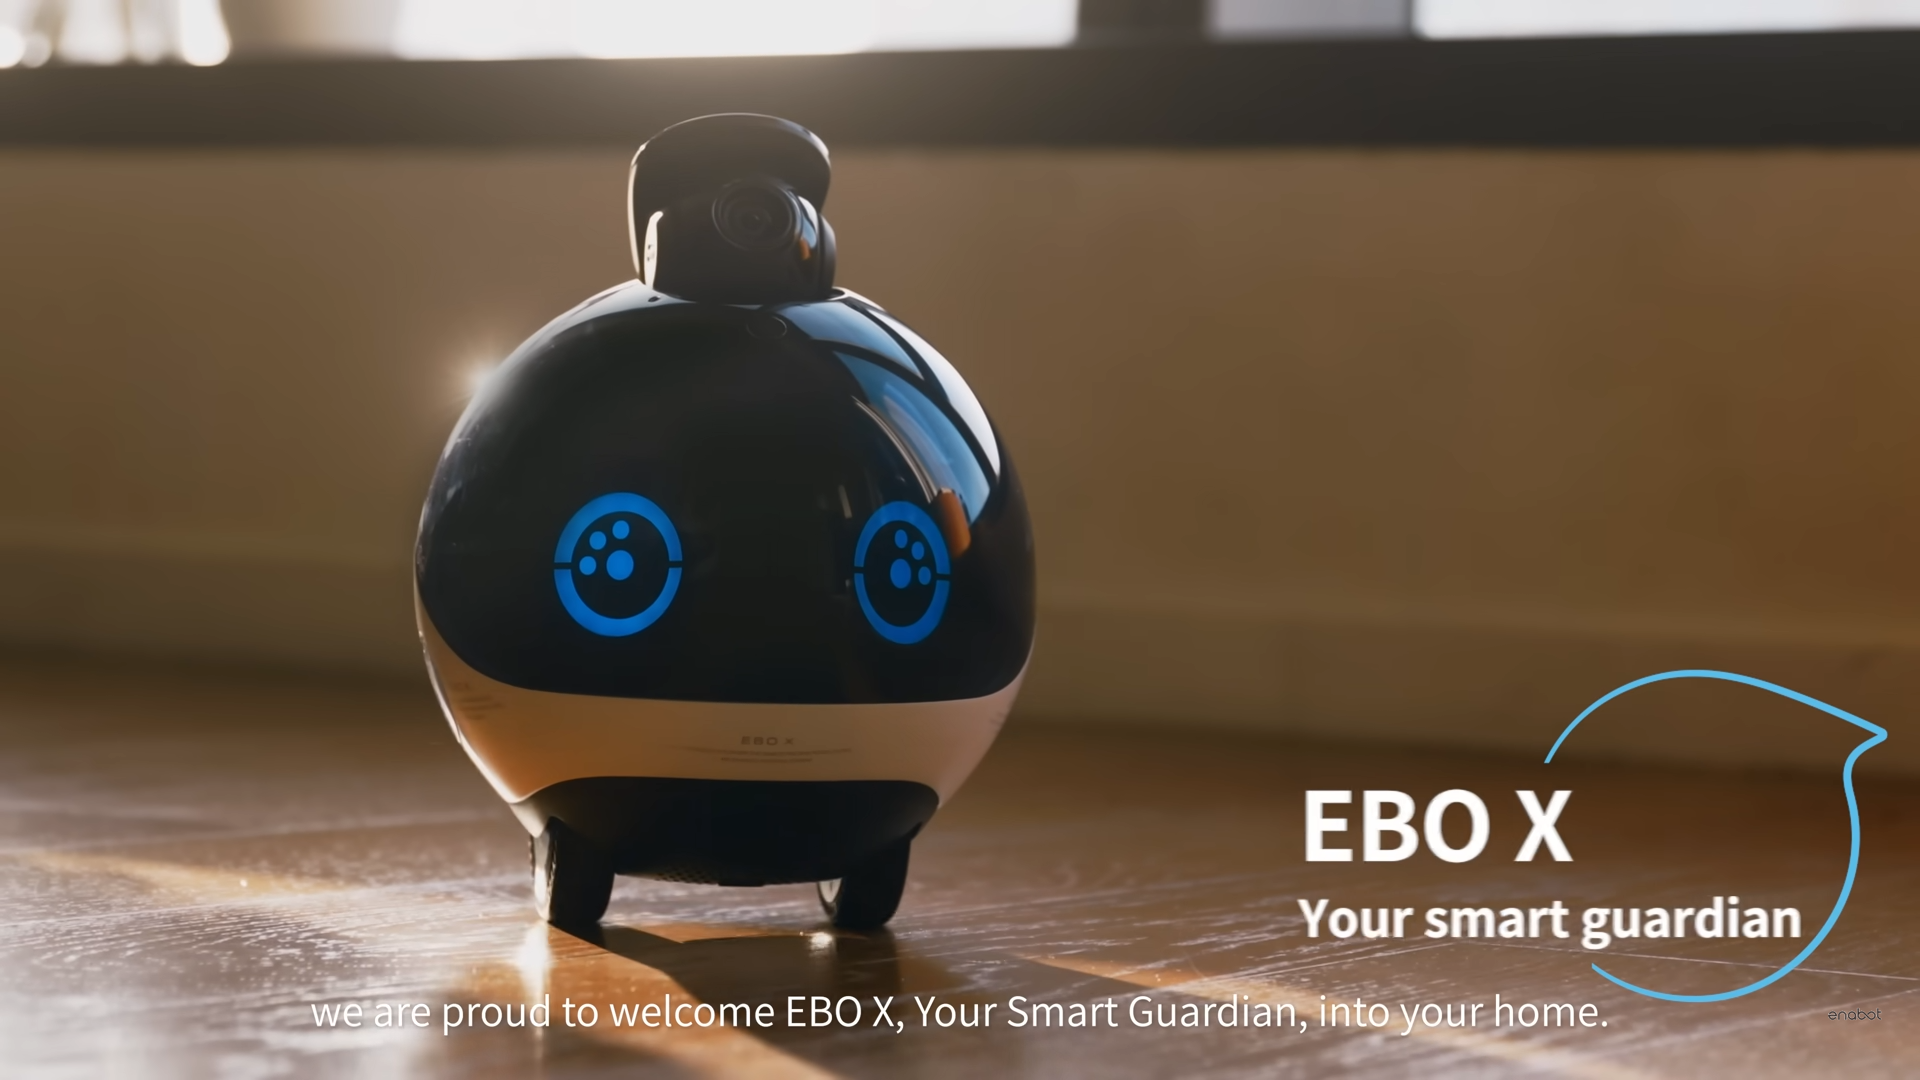 Enabot EBO X home robot Kickstarter attains nearly 20 times its goal -   News